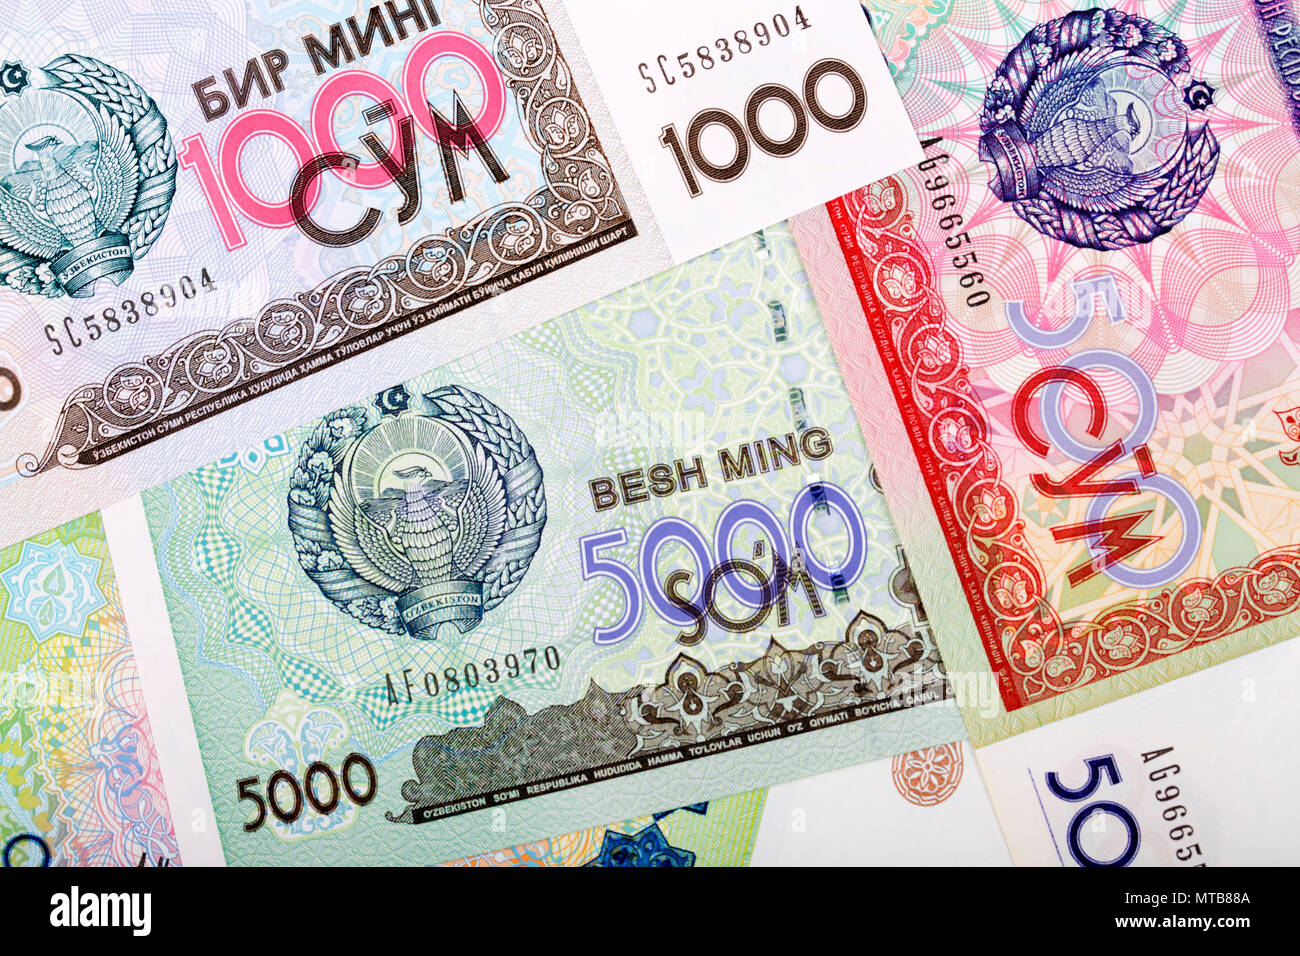 Деньги Узбекистана. 10000 Узбекских сум. Деньги картинки сом. Узбекский сум знак валюты.